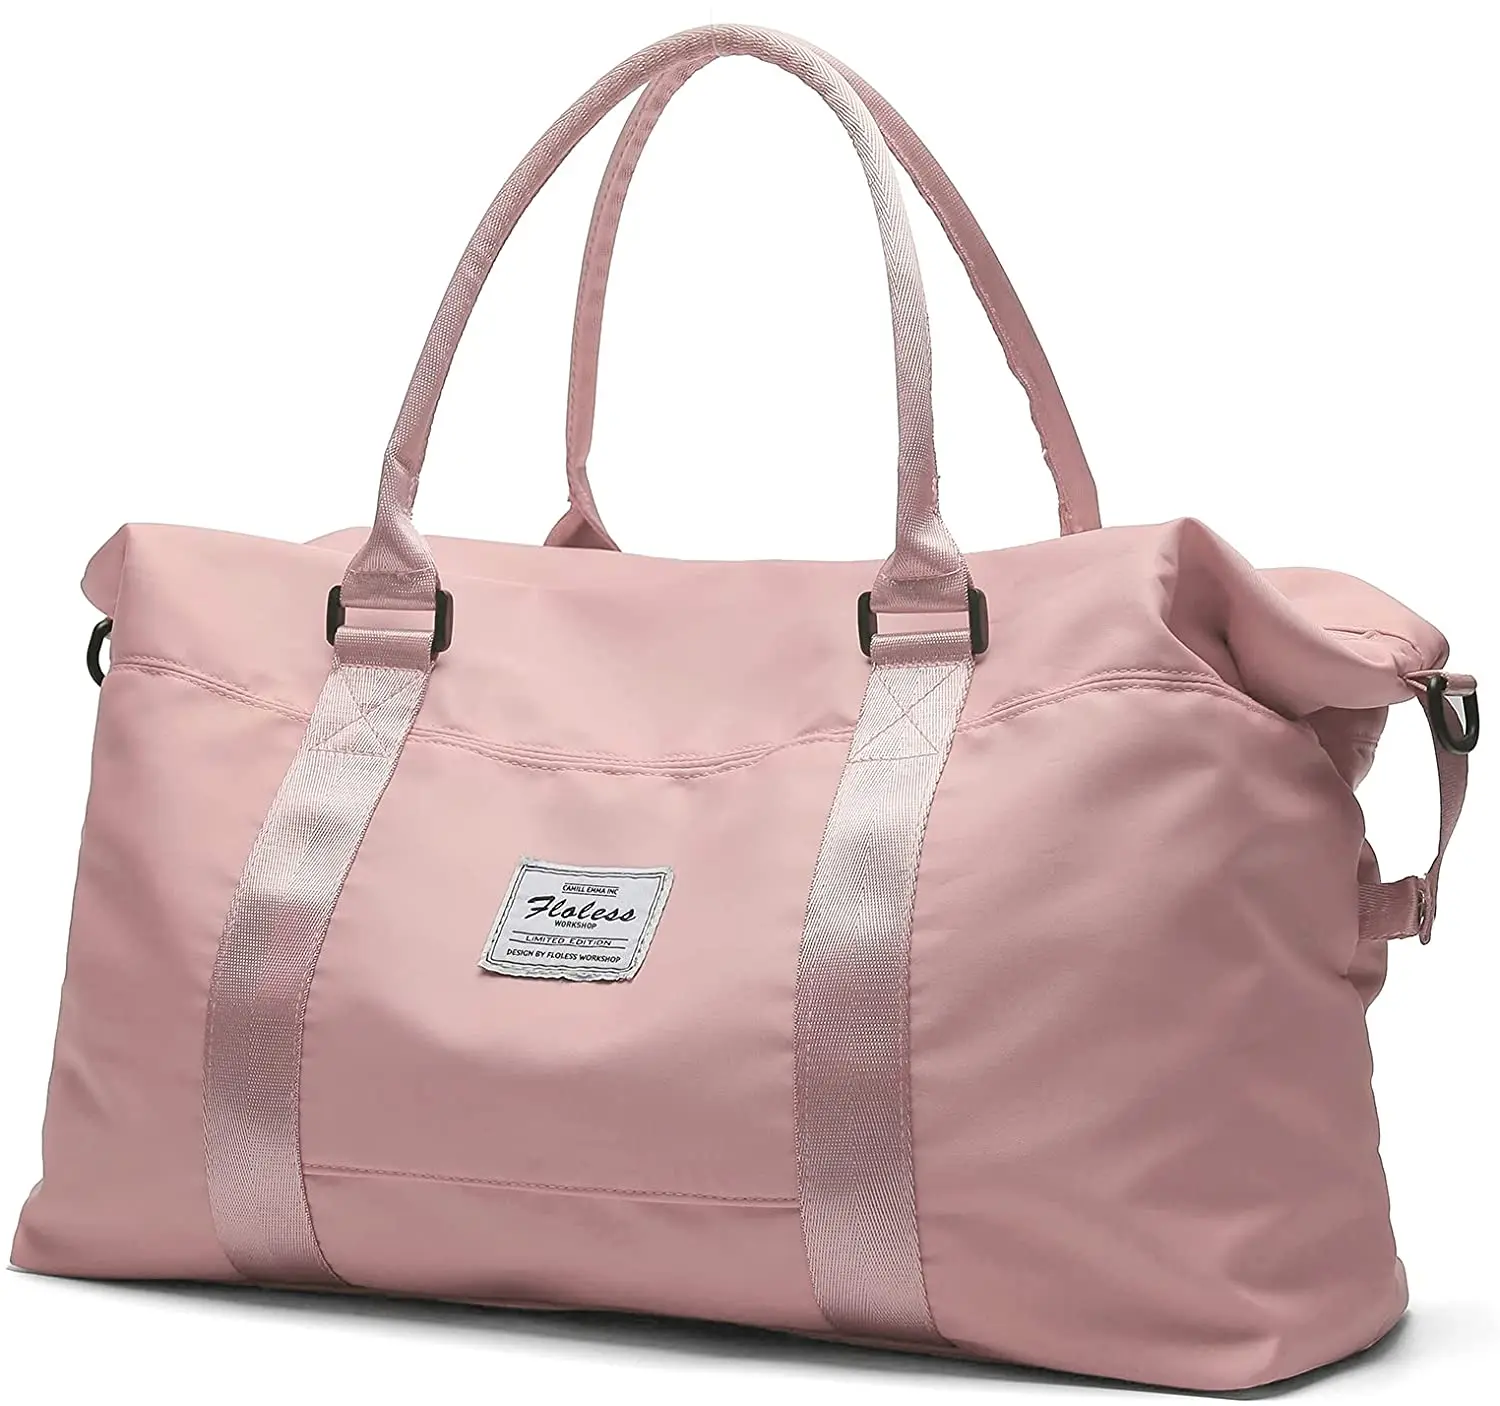 Buy Nutcase Designer Tote Bag for Women Gym Beach Travel Shopping